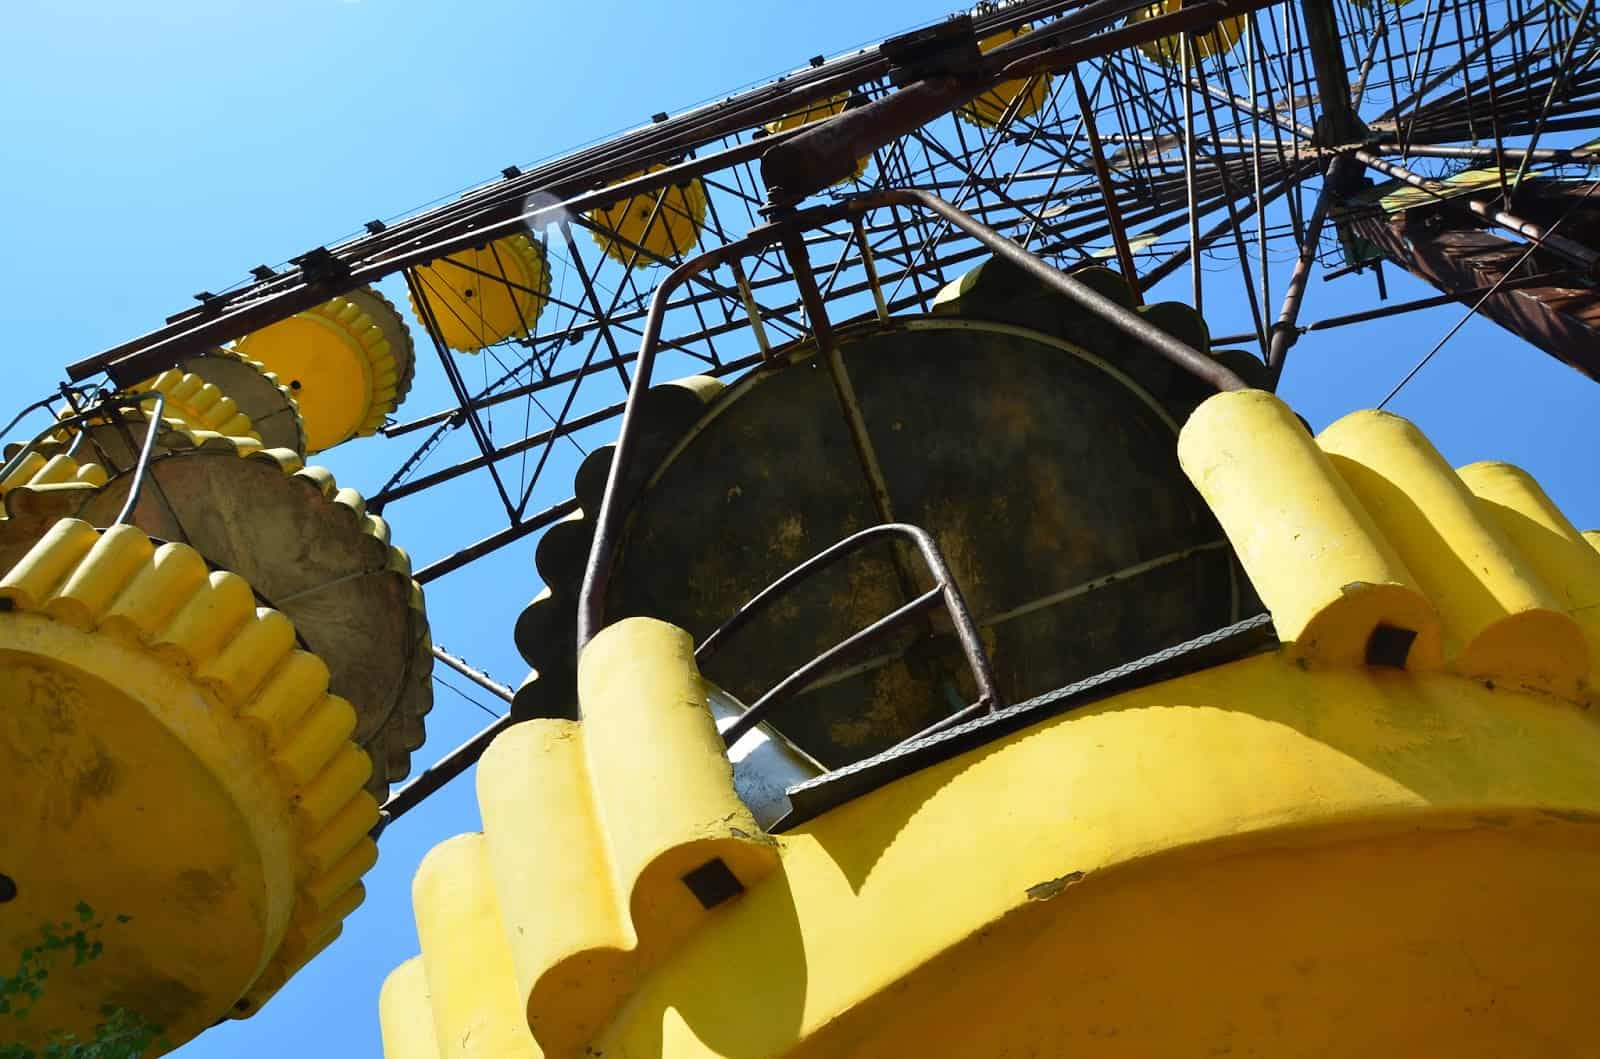 Ferris Wheel in Pripyat, Chernobyl Exclusion Zone, Ukraine